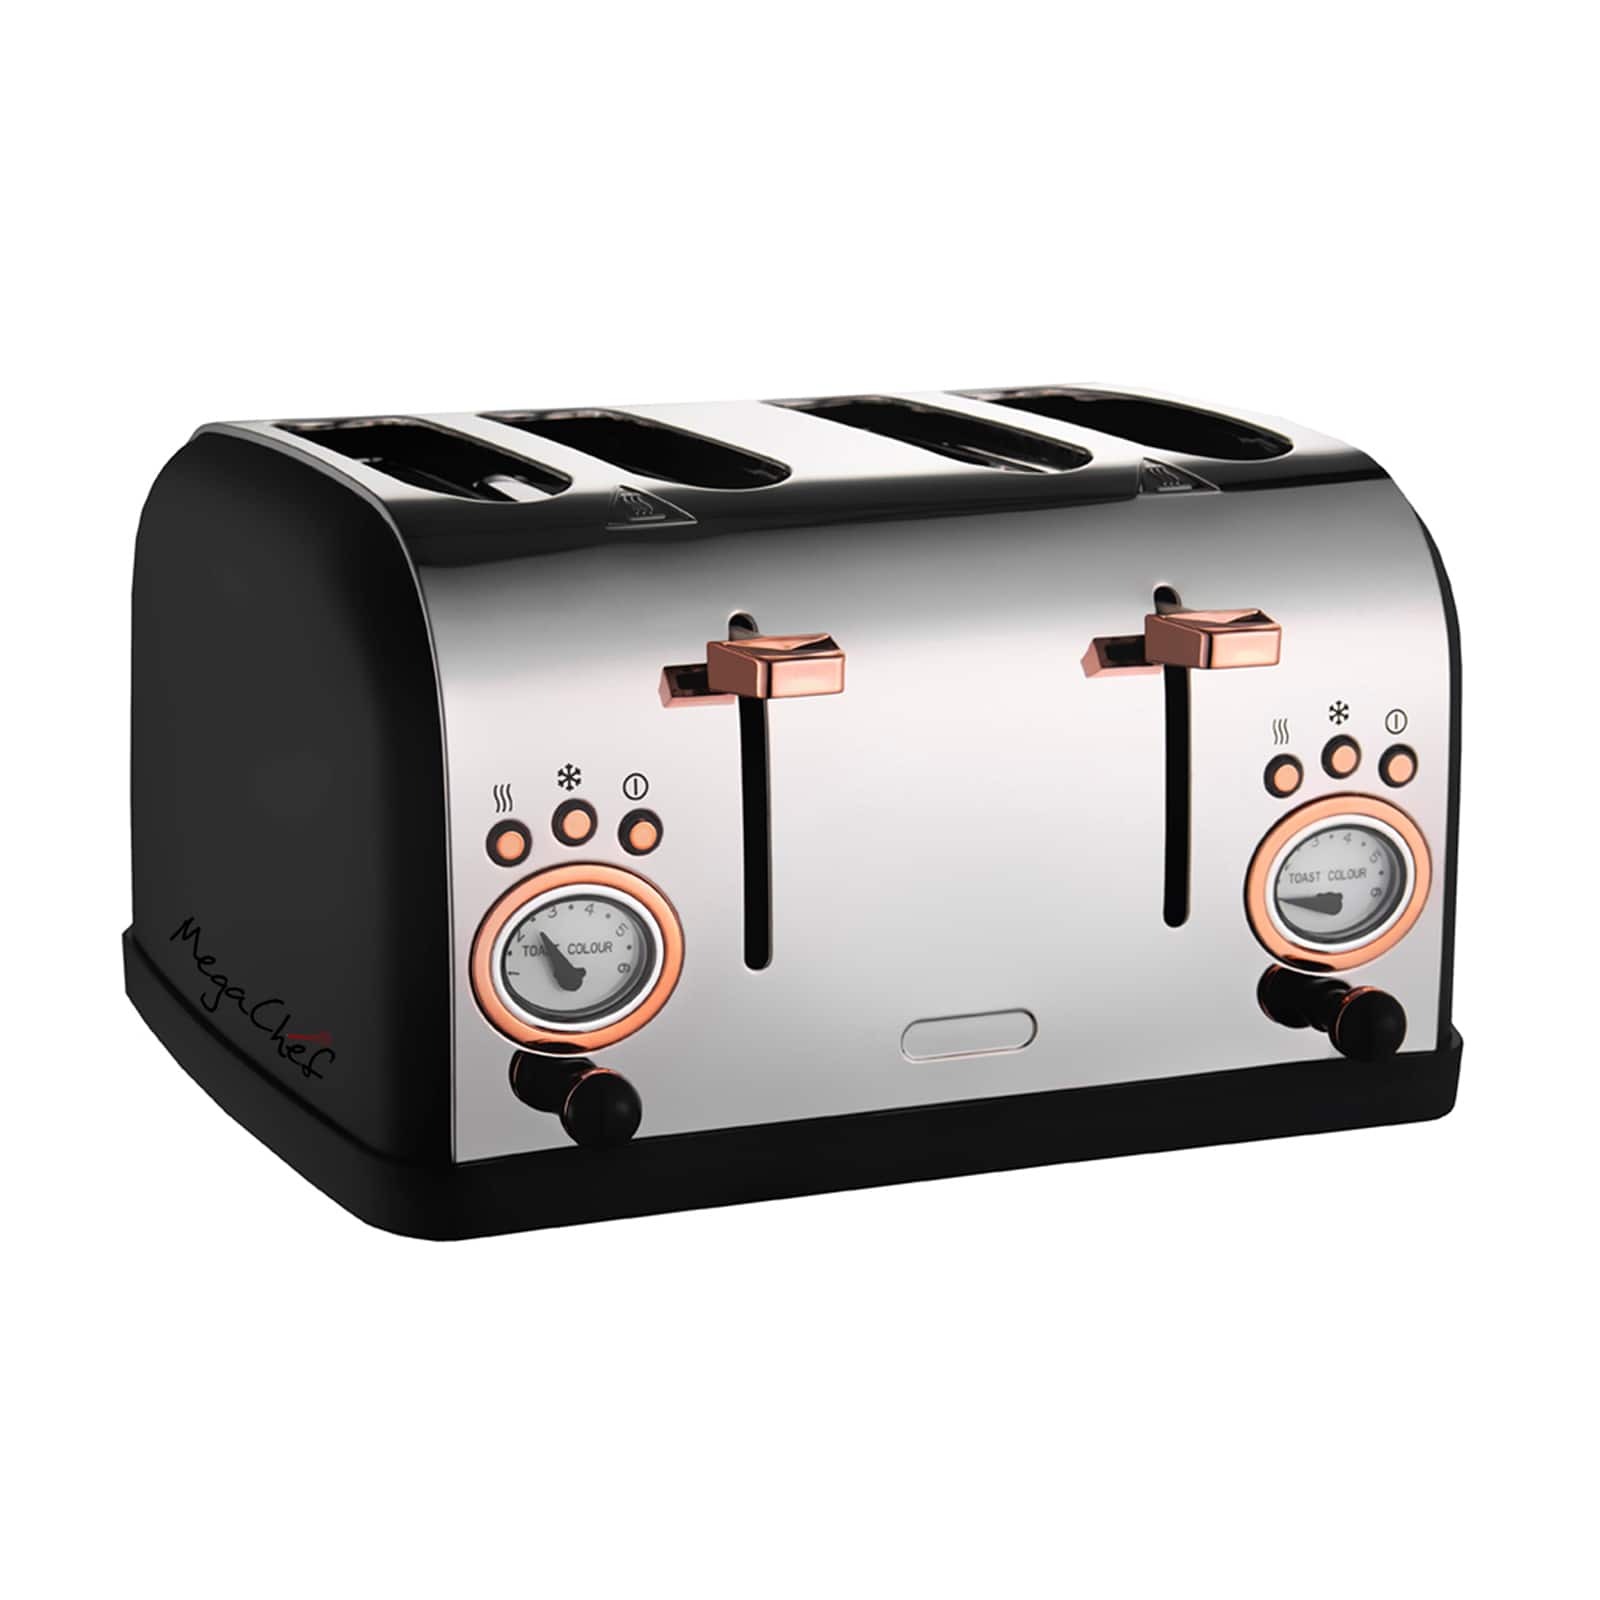 MegaChef 4-Slice Stainless Steel Toaster